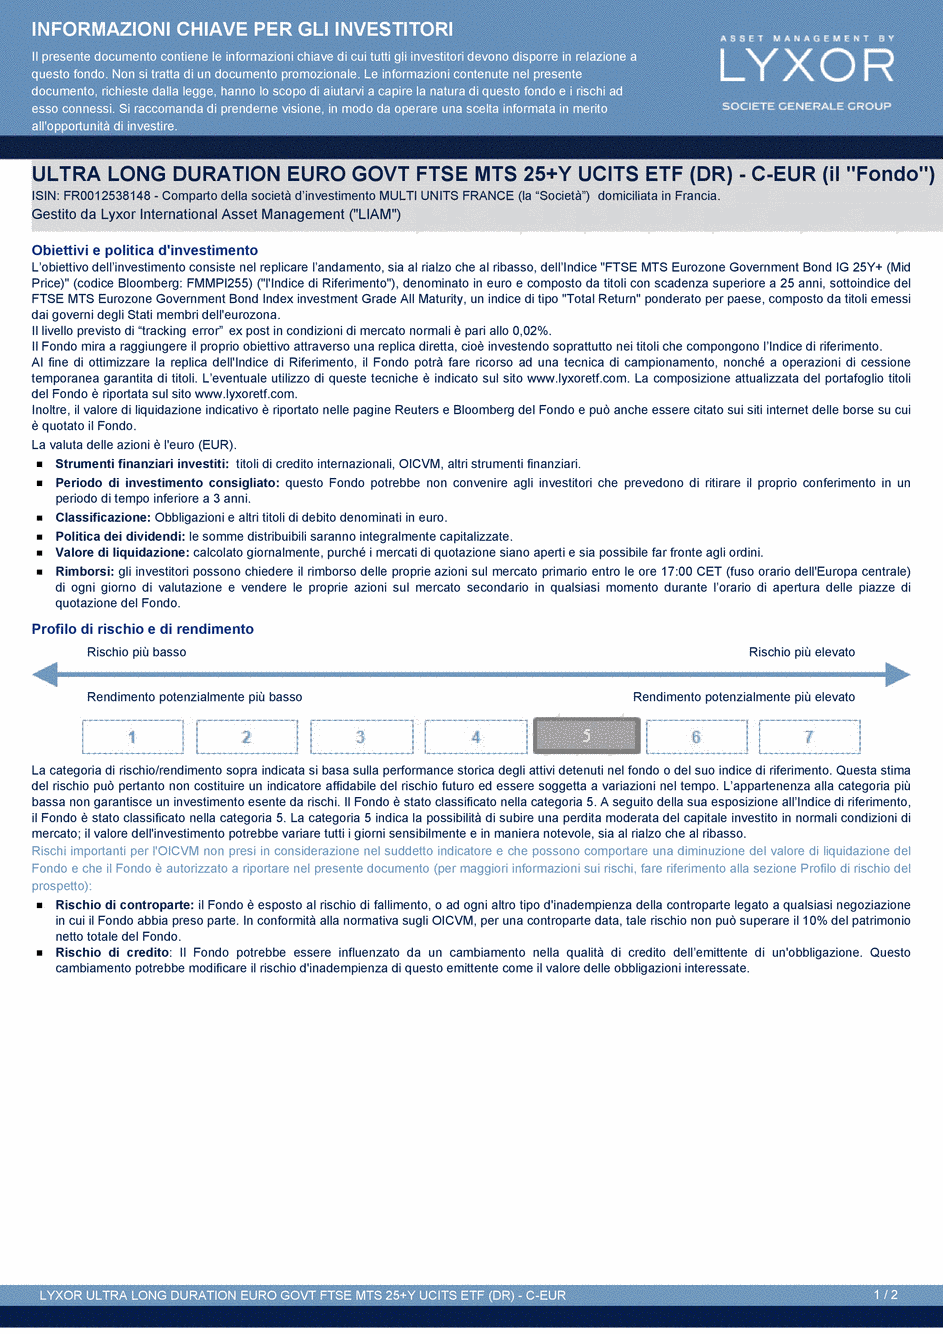 DICI LYXOR ULTRA LONG DURATION EURO GOVT FTSE MTS 25+Y (DR) UCITS ETF - C-EUR - 30/06/2016 - Italien